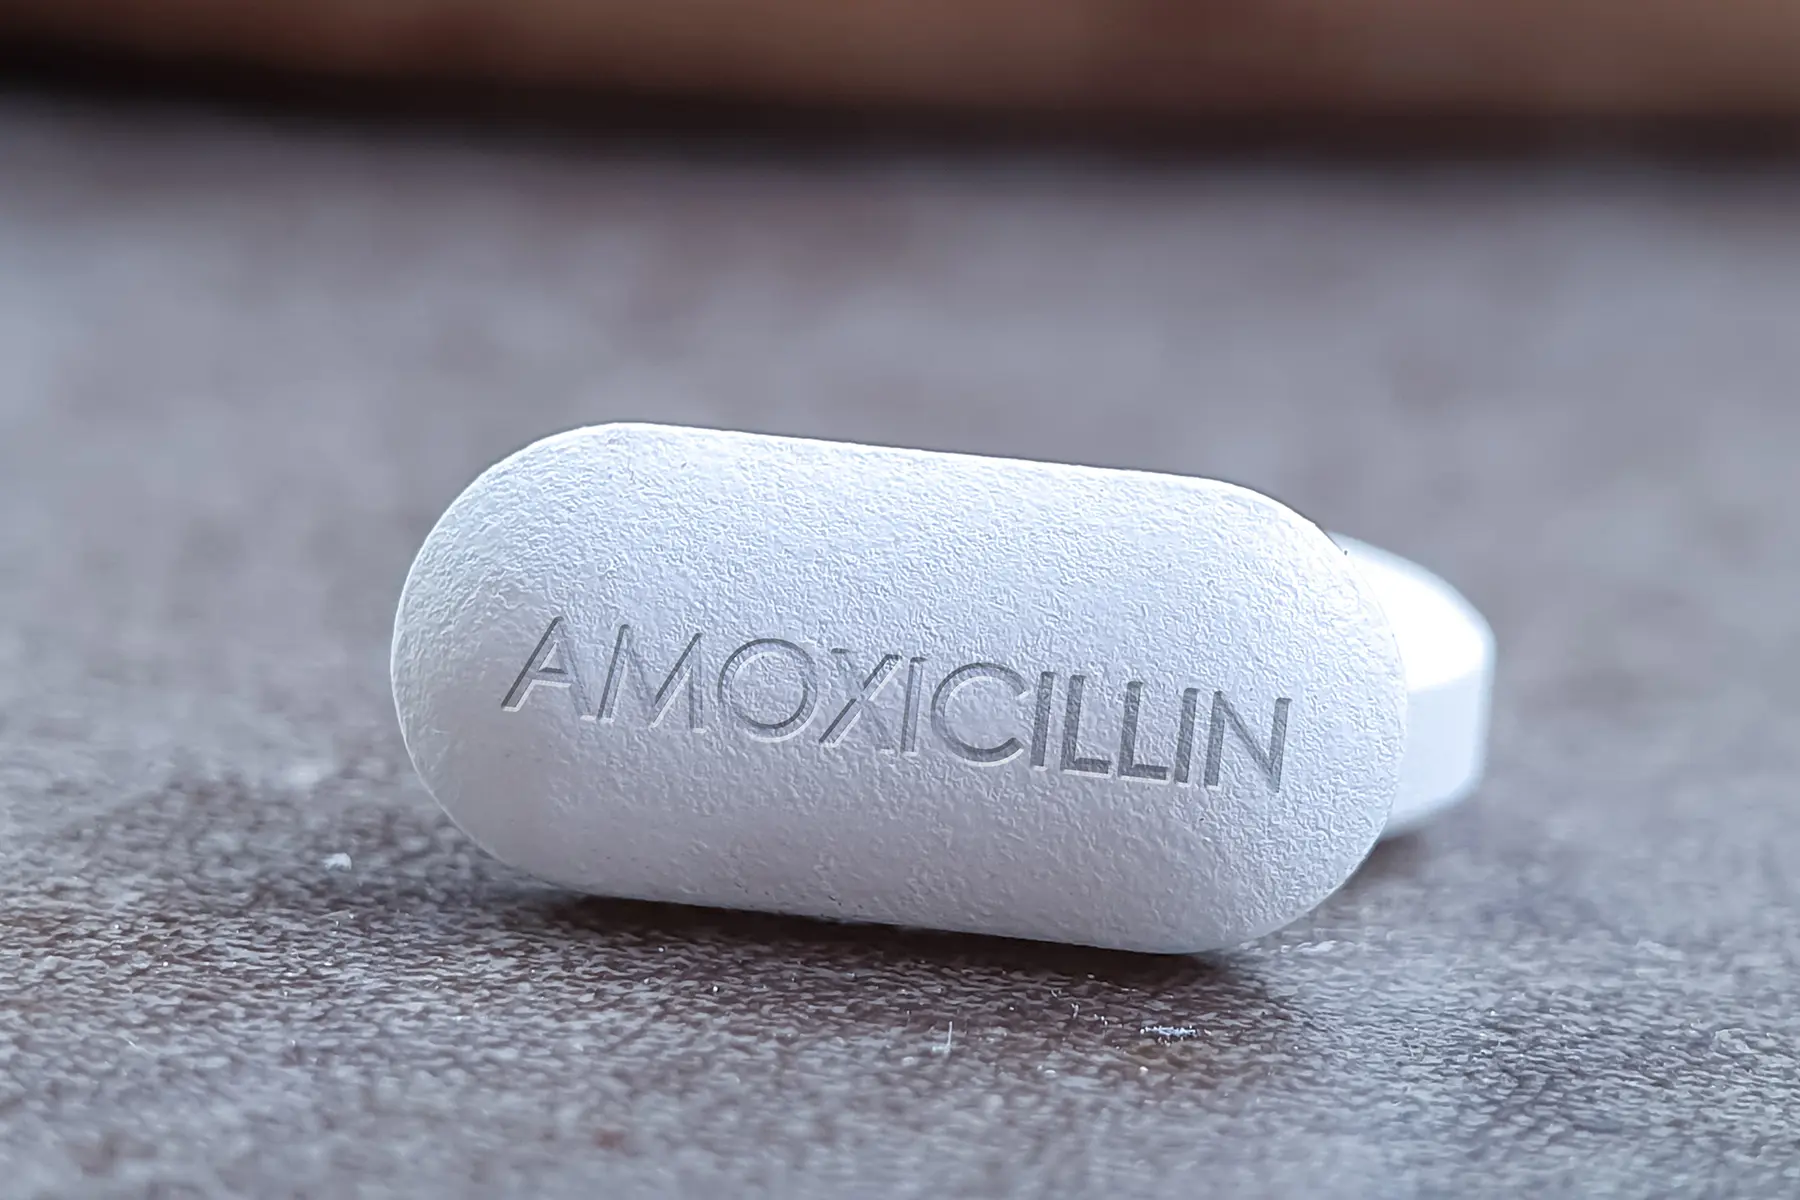 Amoxicillin capsule